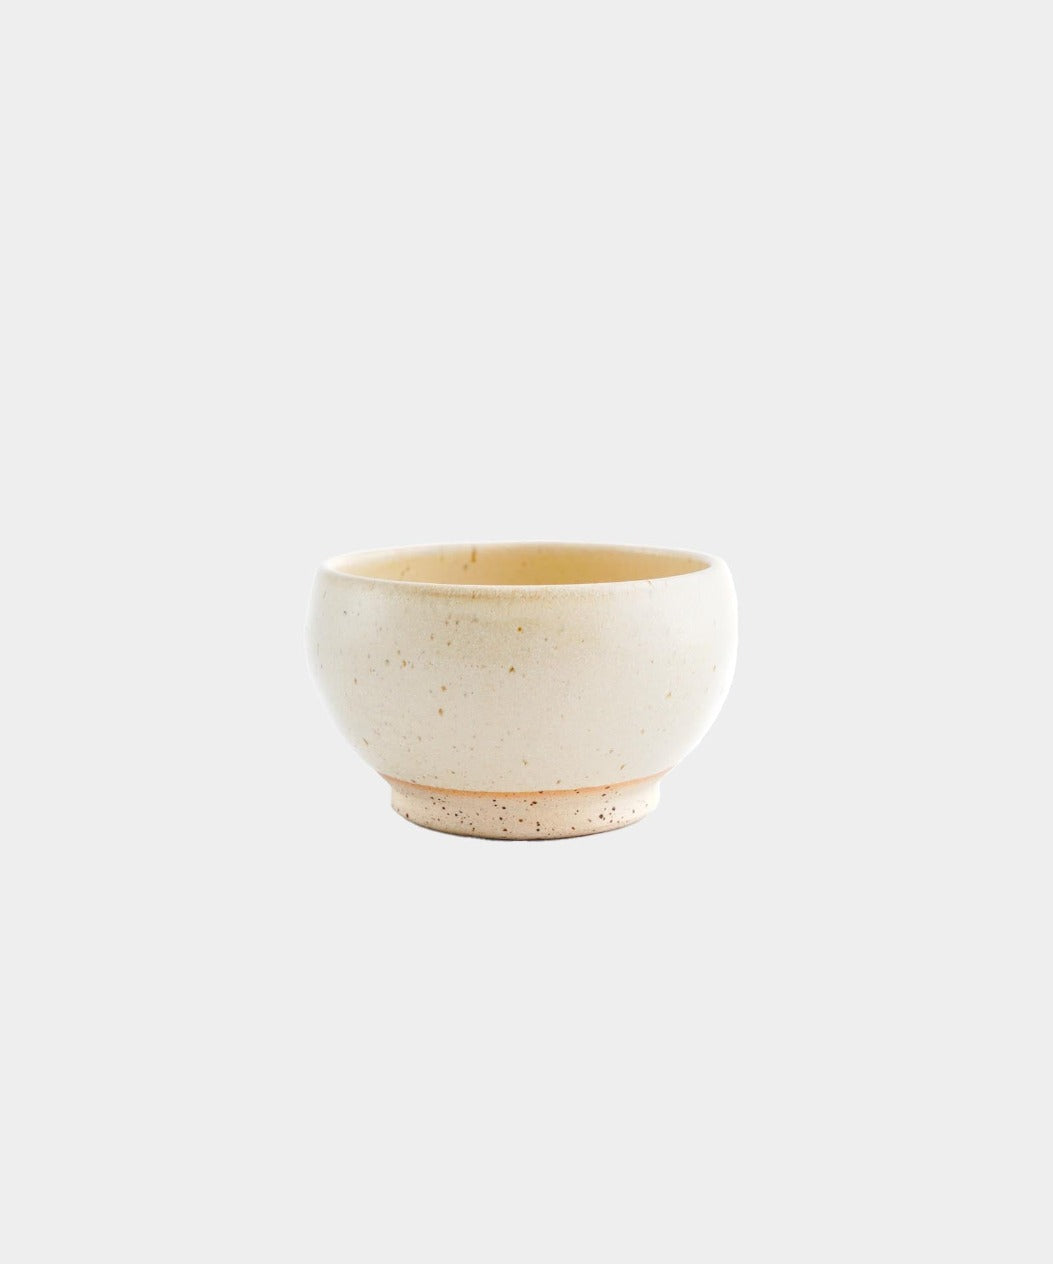 Håndlavet Keramik Nøddeskål | NATURAL by Vang | Kerama